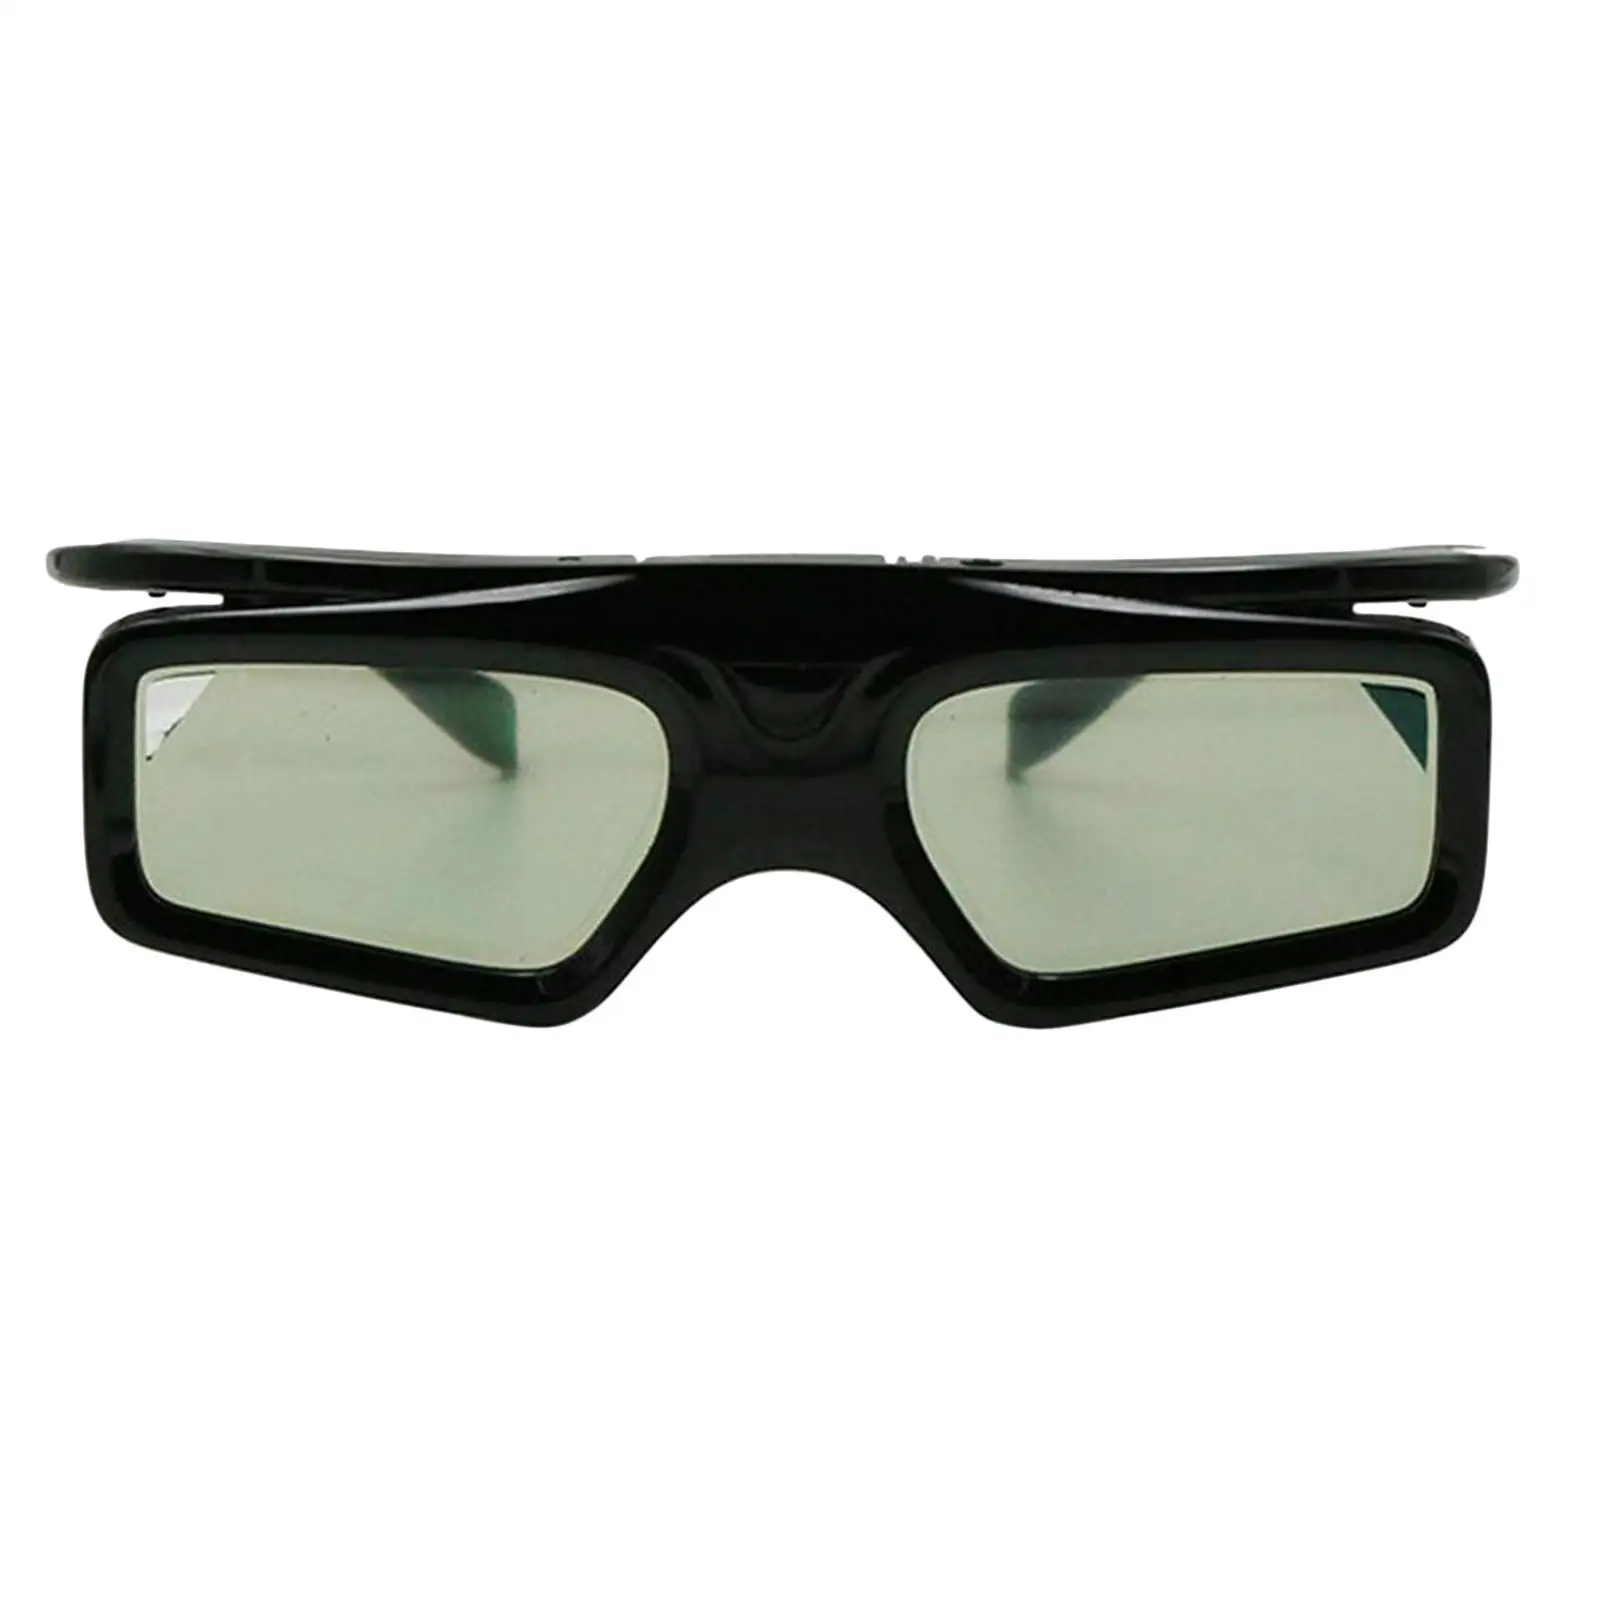 DLP Link 3D Glasses Active Shutter Rechargeable for All DLP Link 3D